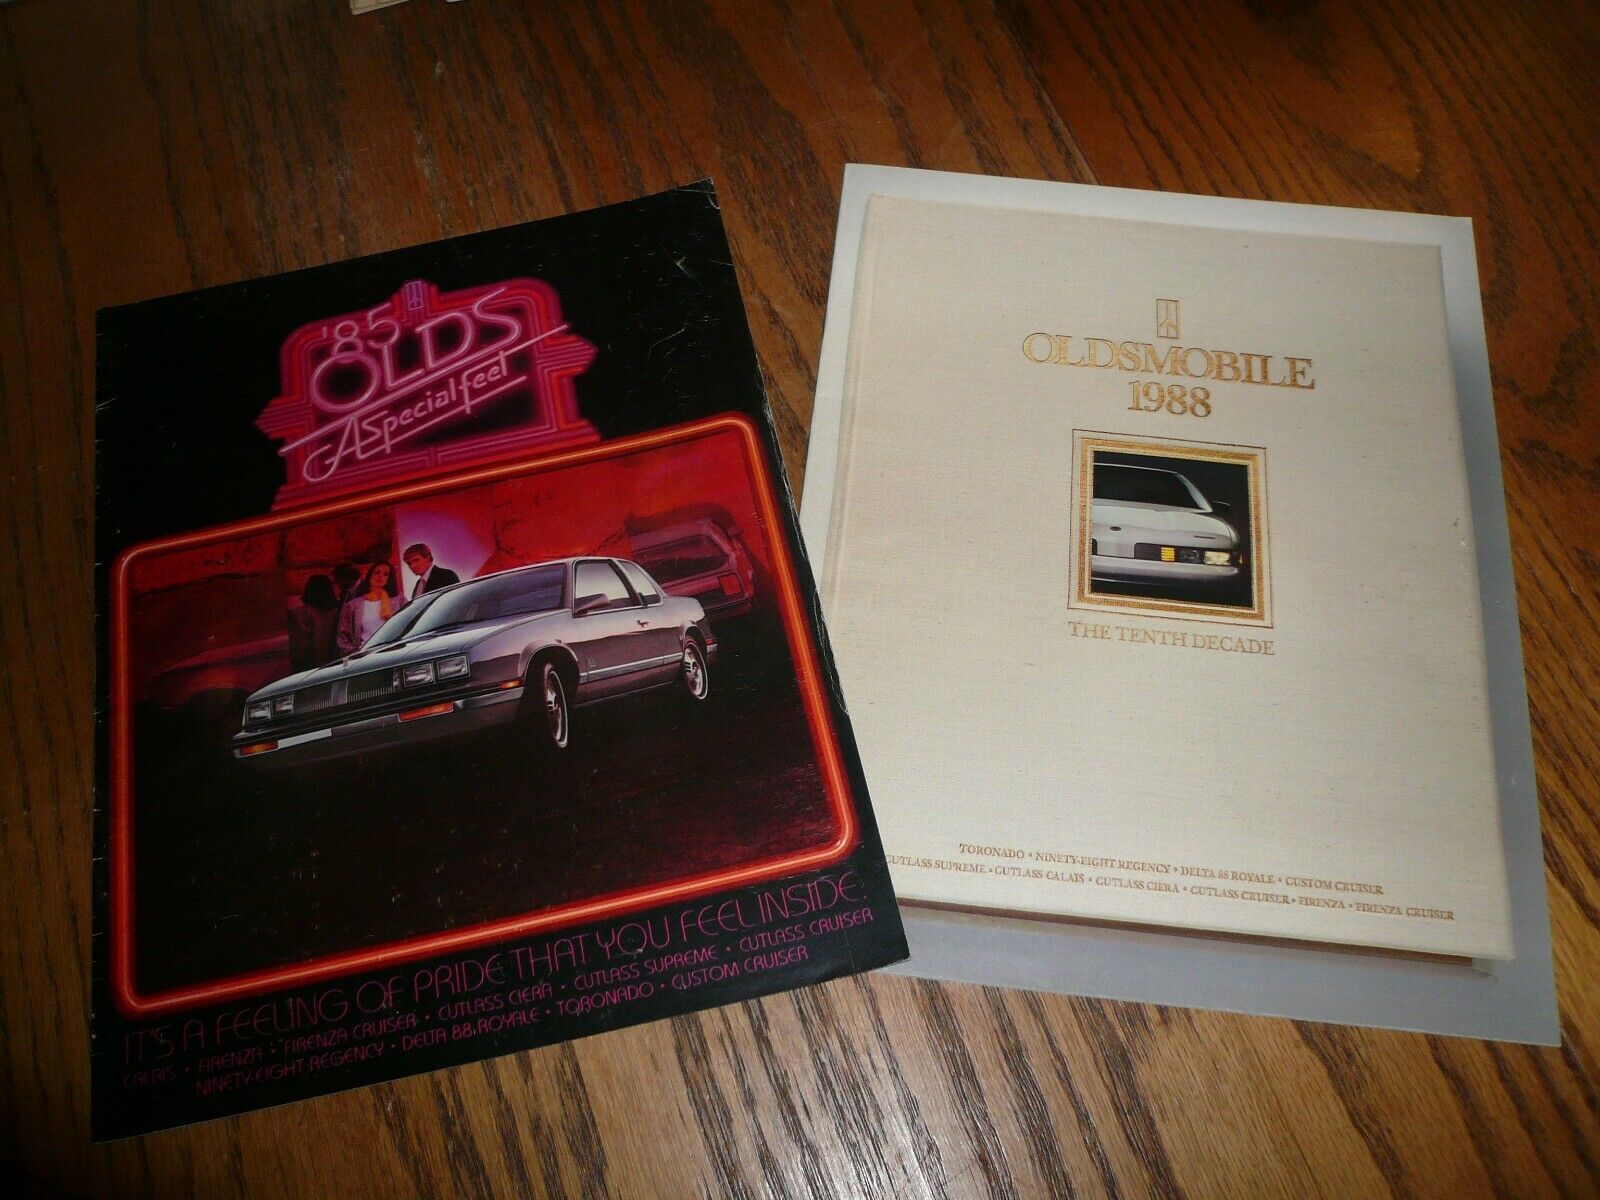 1985 & 1988 Oldsmobile Cutlass Delta 88 Omega 98 Toronado Sales Brochures -Two